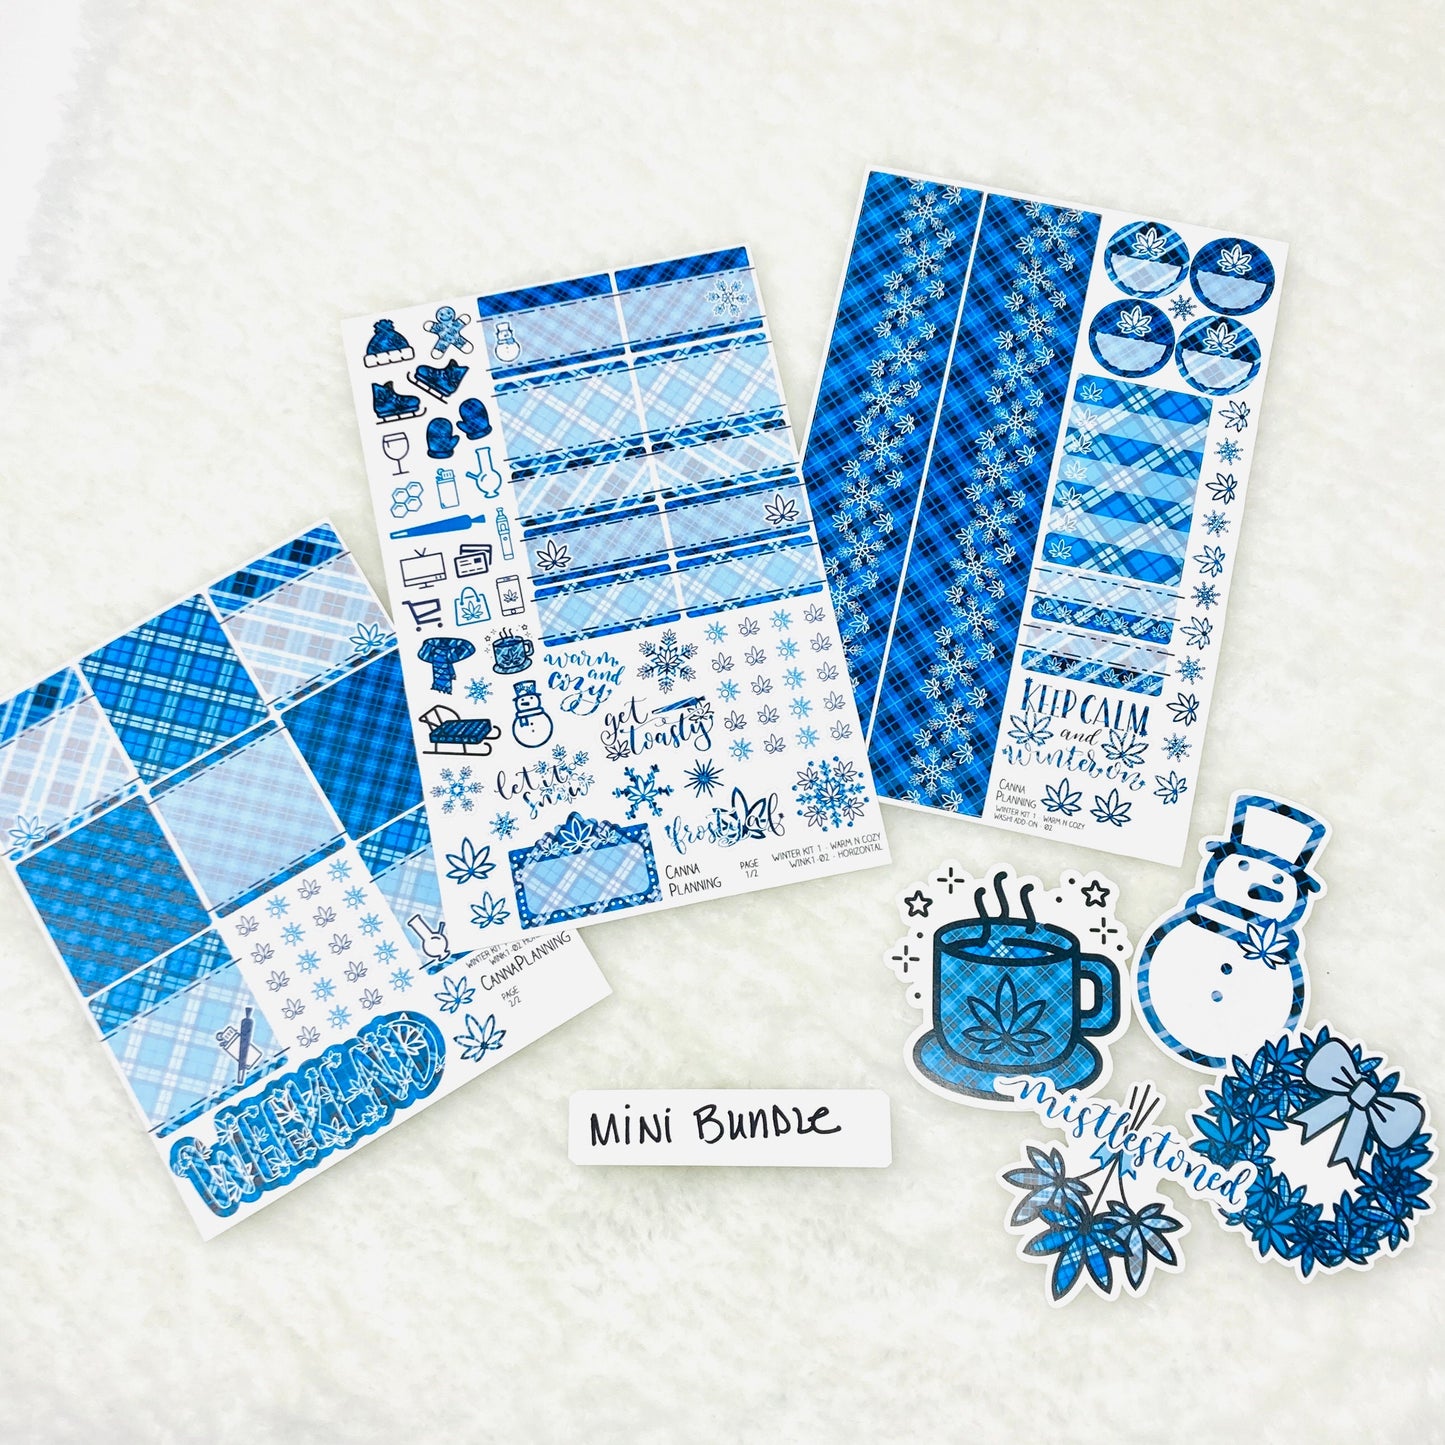 Ultimate Sticker Bundle: "Warm N Cozy" Blue Buffalo Plaid Marijuana Sticker Kit *Retiring Design*  (7052217286833)